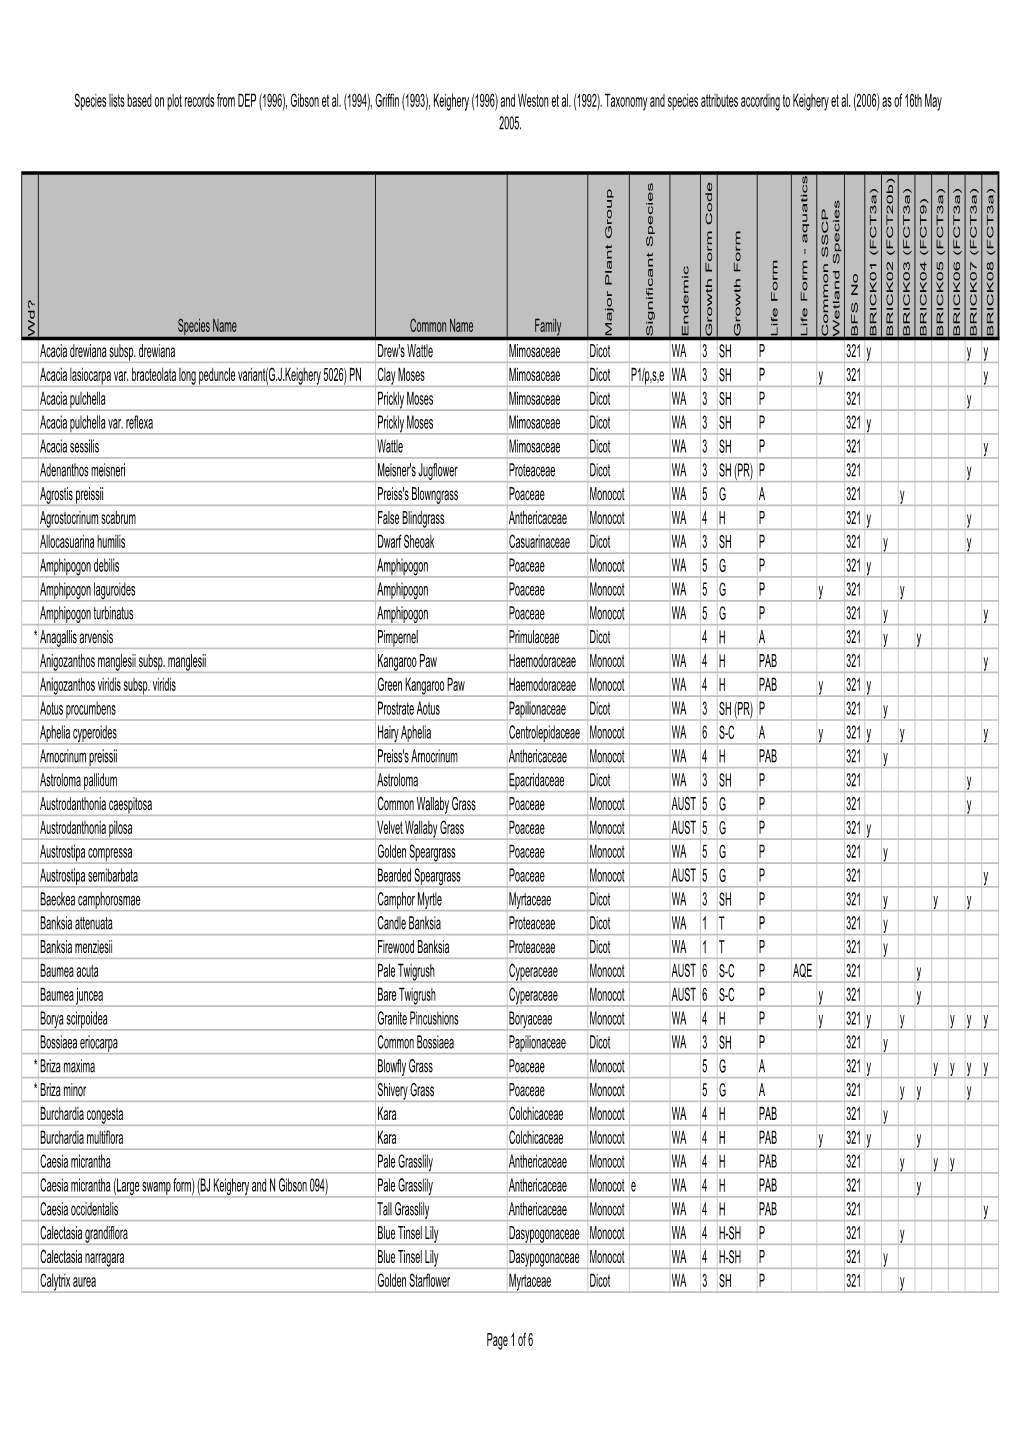 BFS321 Site Species List